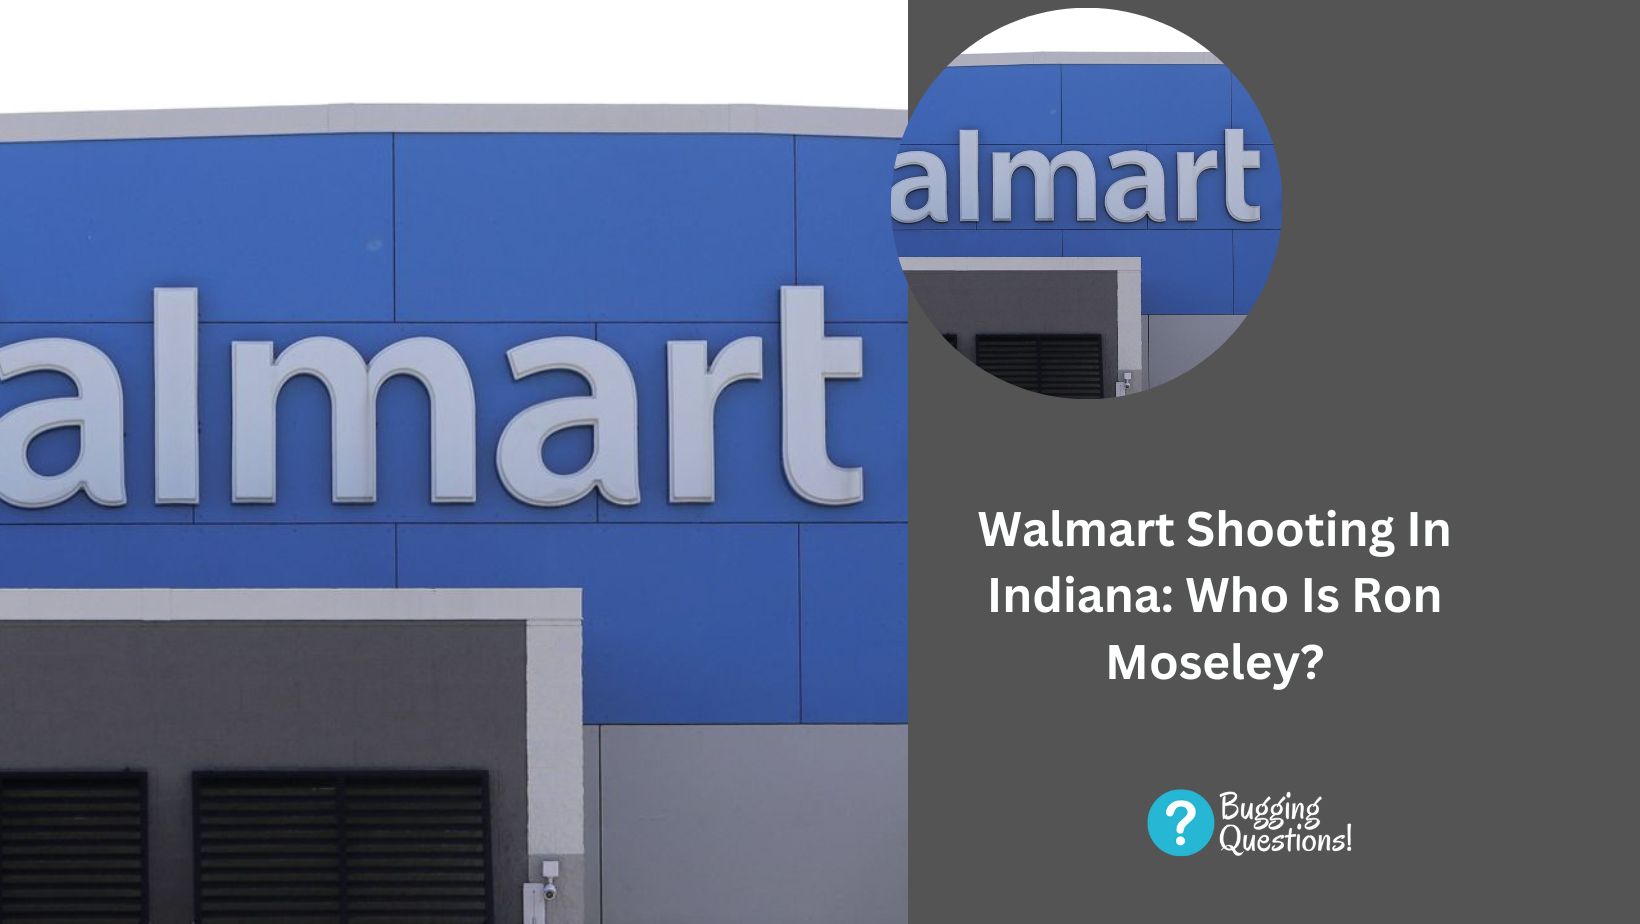 Walmart Shooting In Indiana: Who Is Ron Moseley?